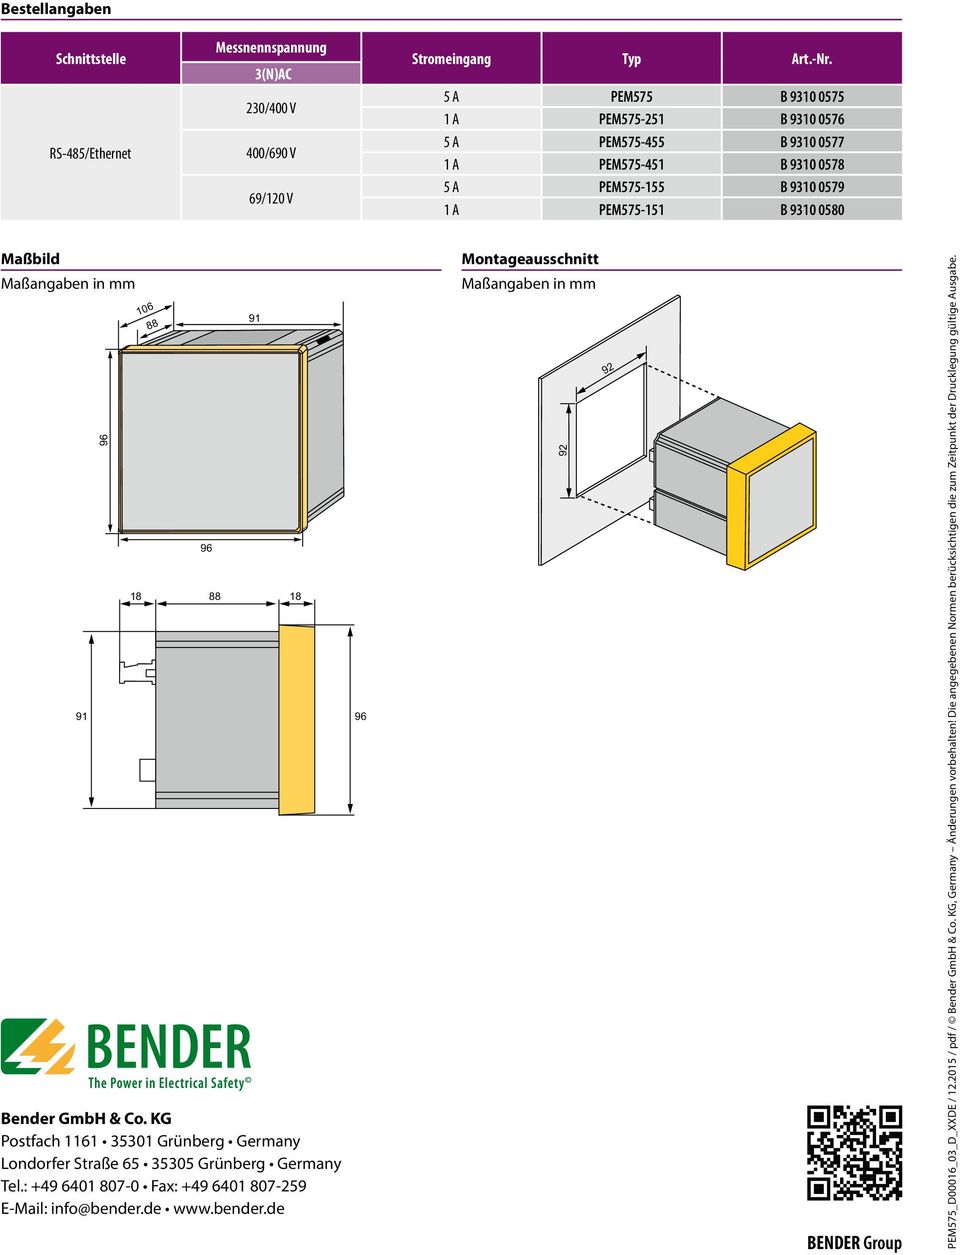 Bender GmbH & Co. KG Postfach 1161 35301 Grünberg Germany Londorfer Straße 65 35305 Grünberg Germany Tel.: +49 6401 807-0 Fax: +49 6401 807-259 E-Mail: info@bender.